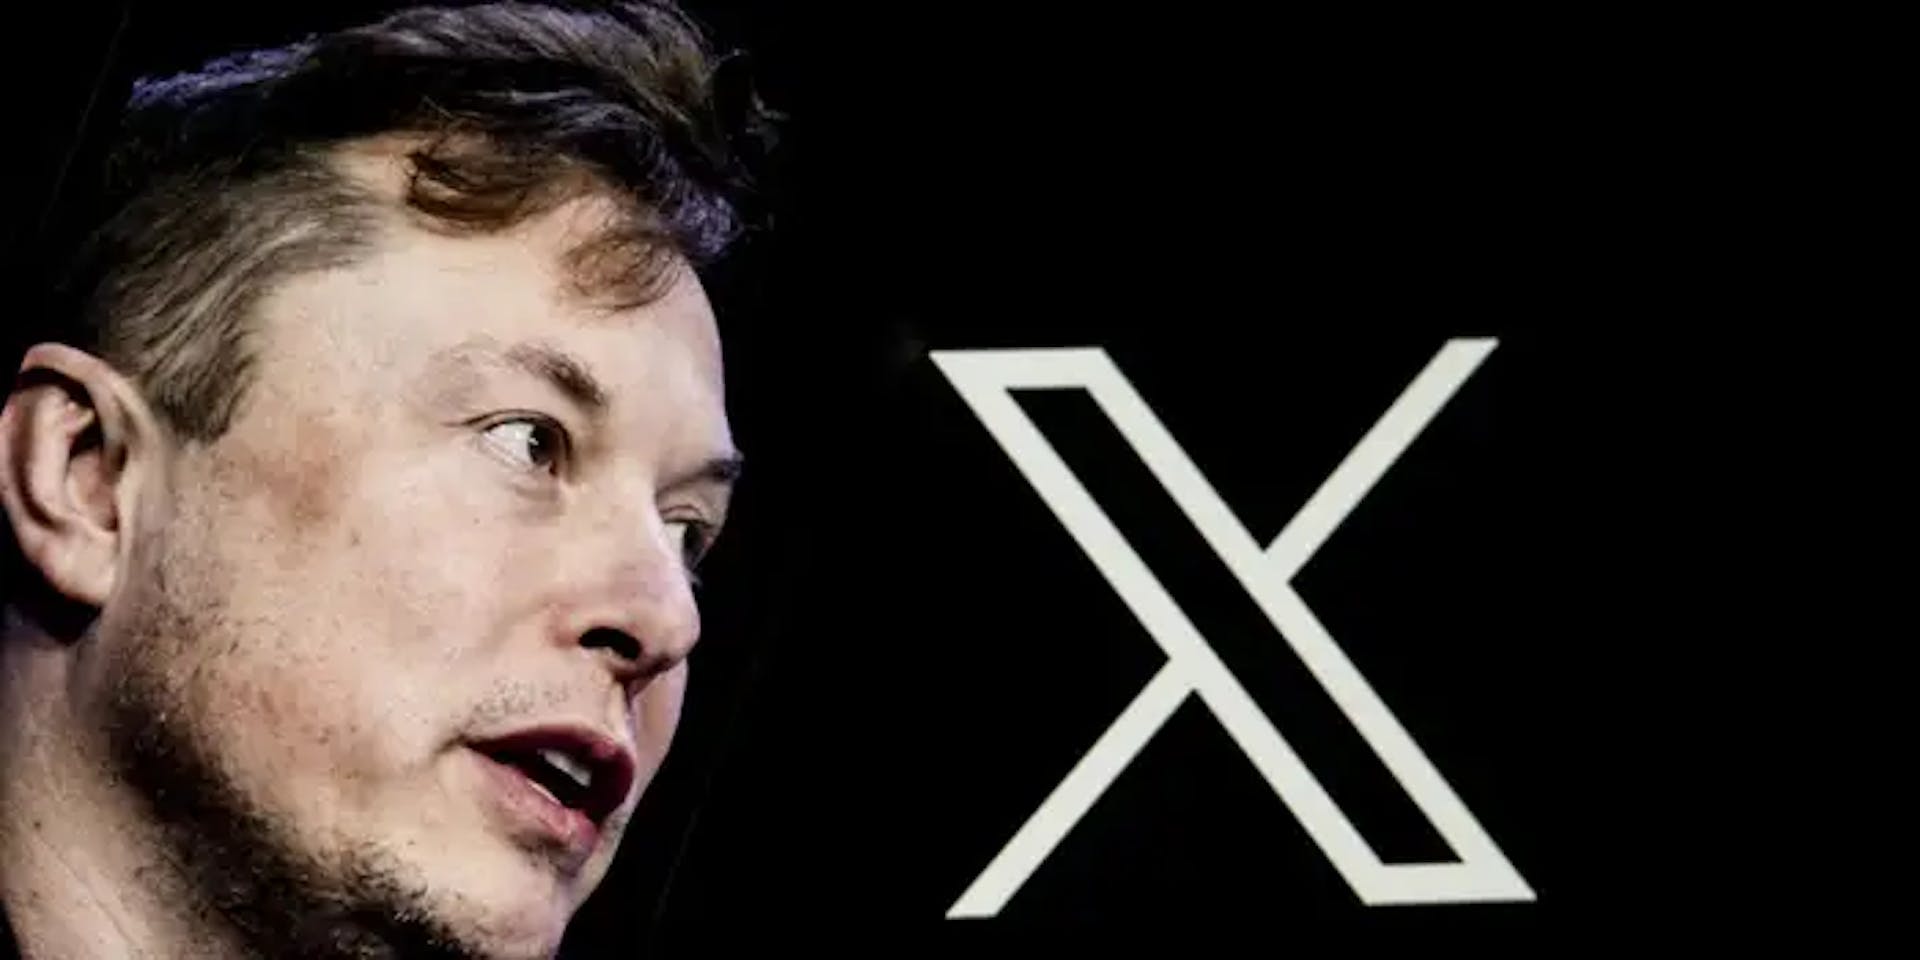 Elon Musk and the X logo